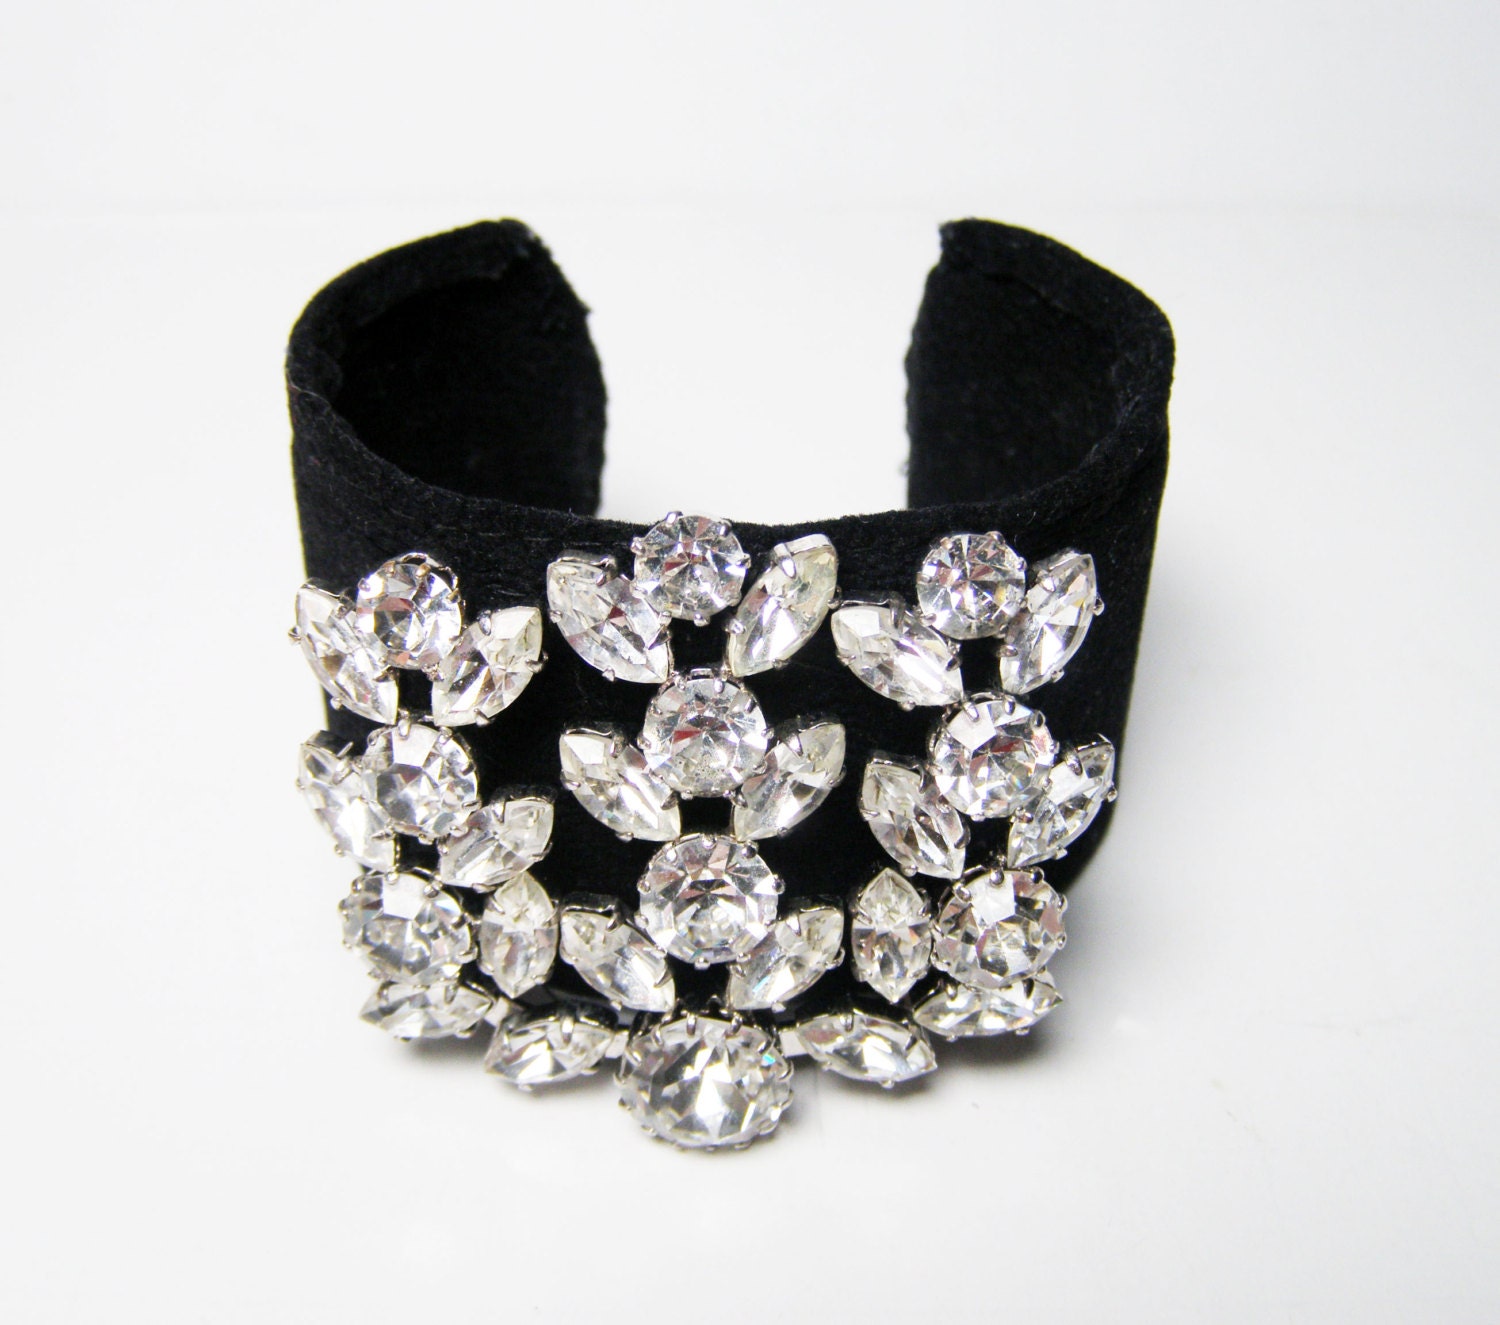 Cuff Bracelet Swarovski Crystal and Black Faux by LorettasCache